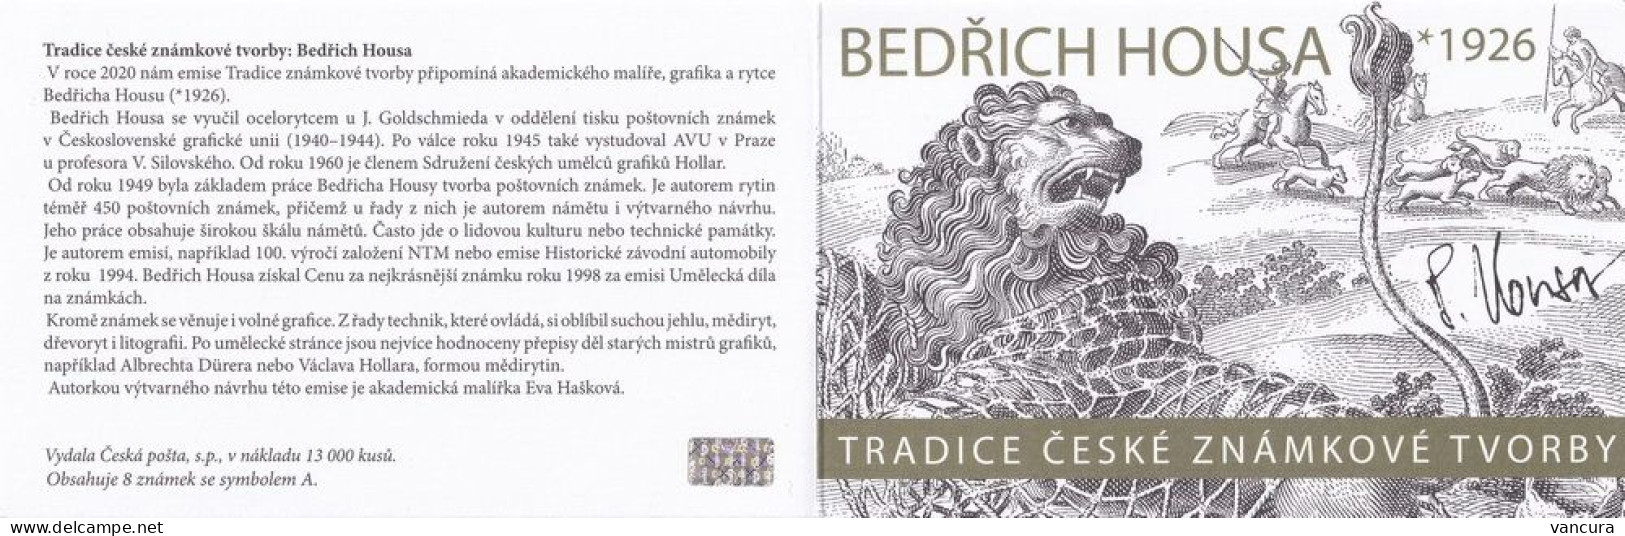 Booklet 1056 Czech Republic Traditions Of The Stamp Design - Bedrich Housa, Engraver 2020 - Felini